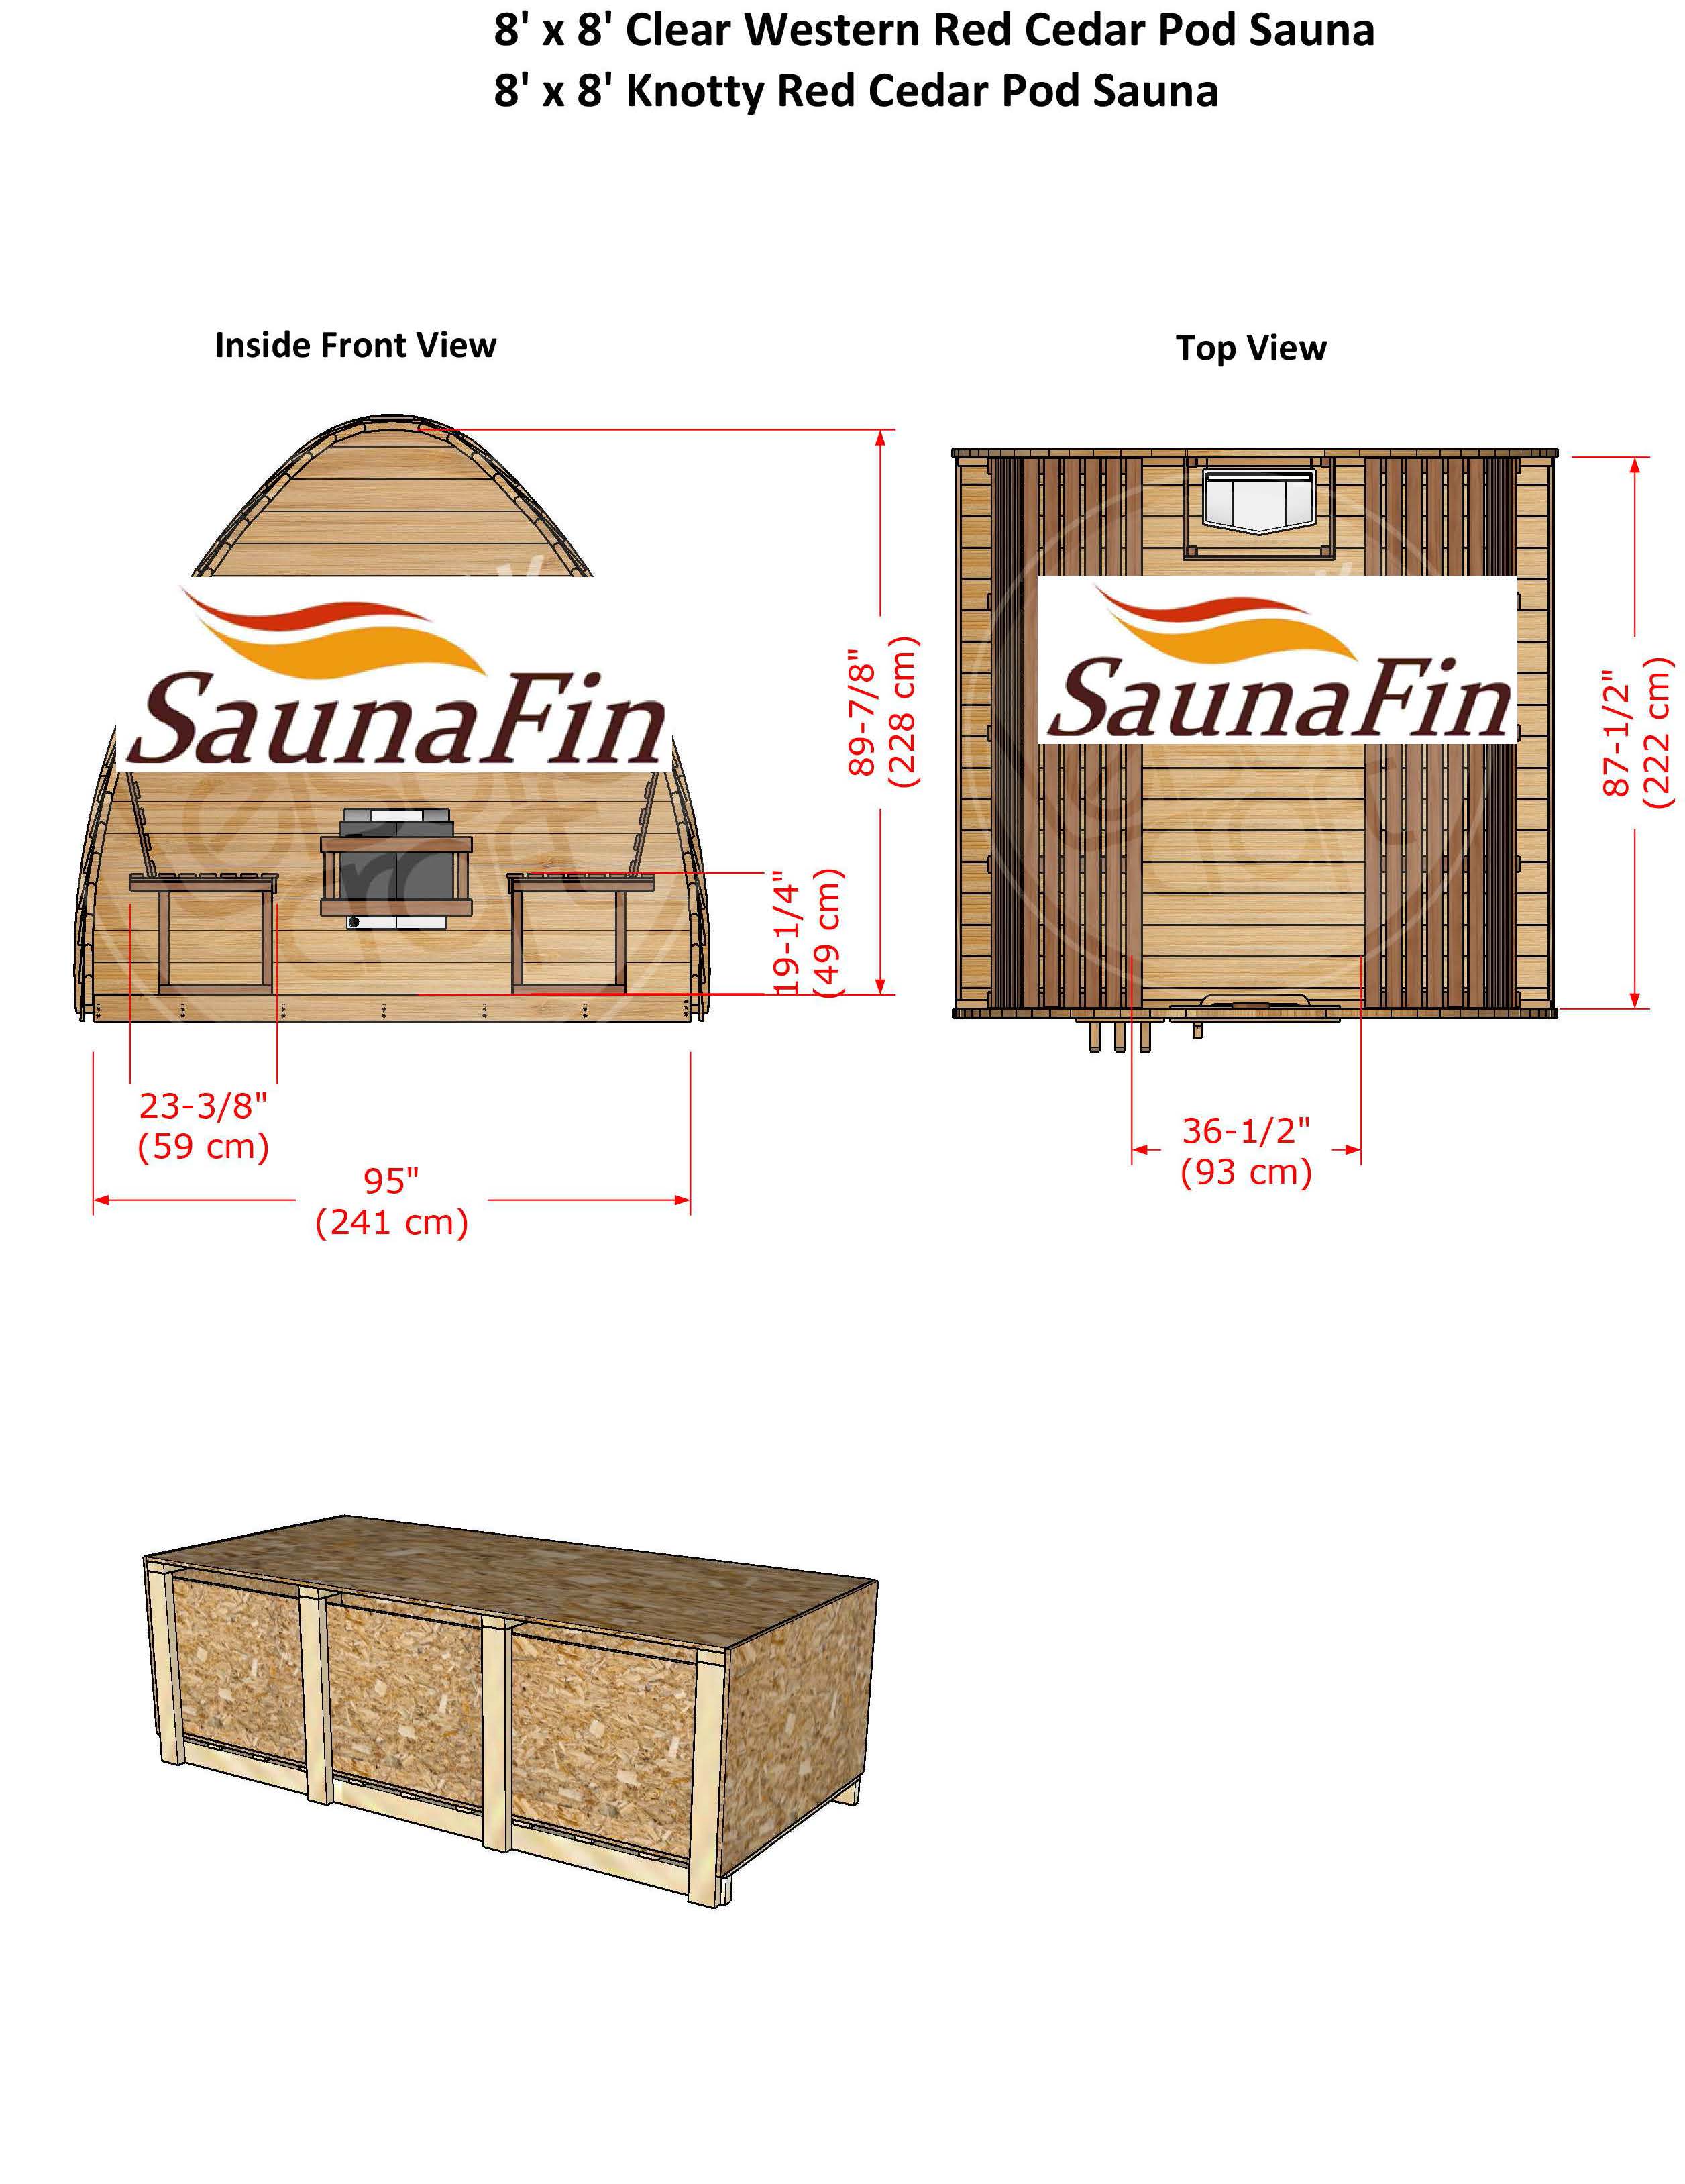 cedar pod sauna layout details